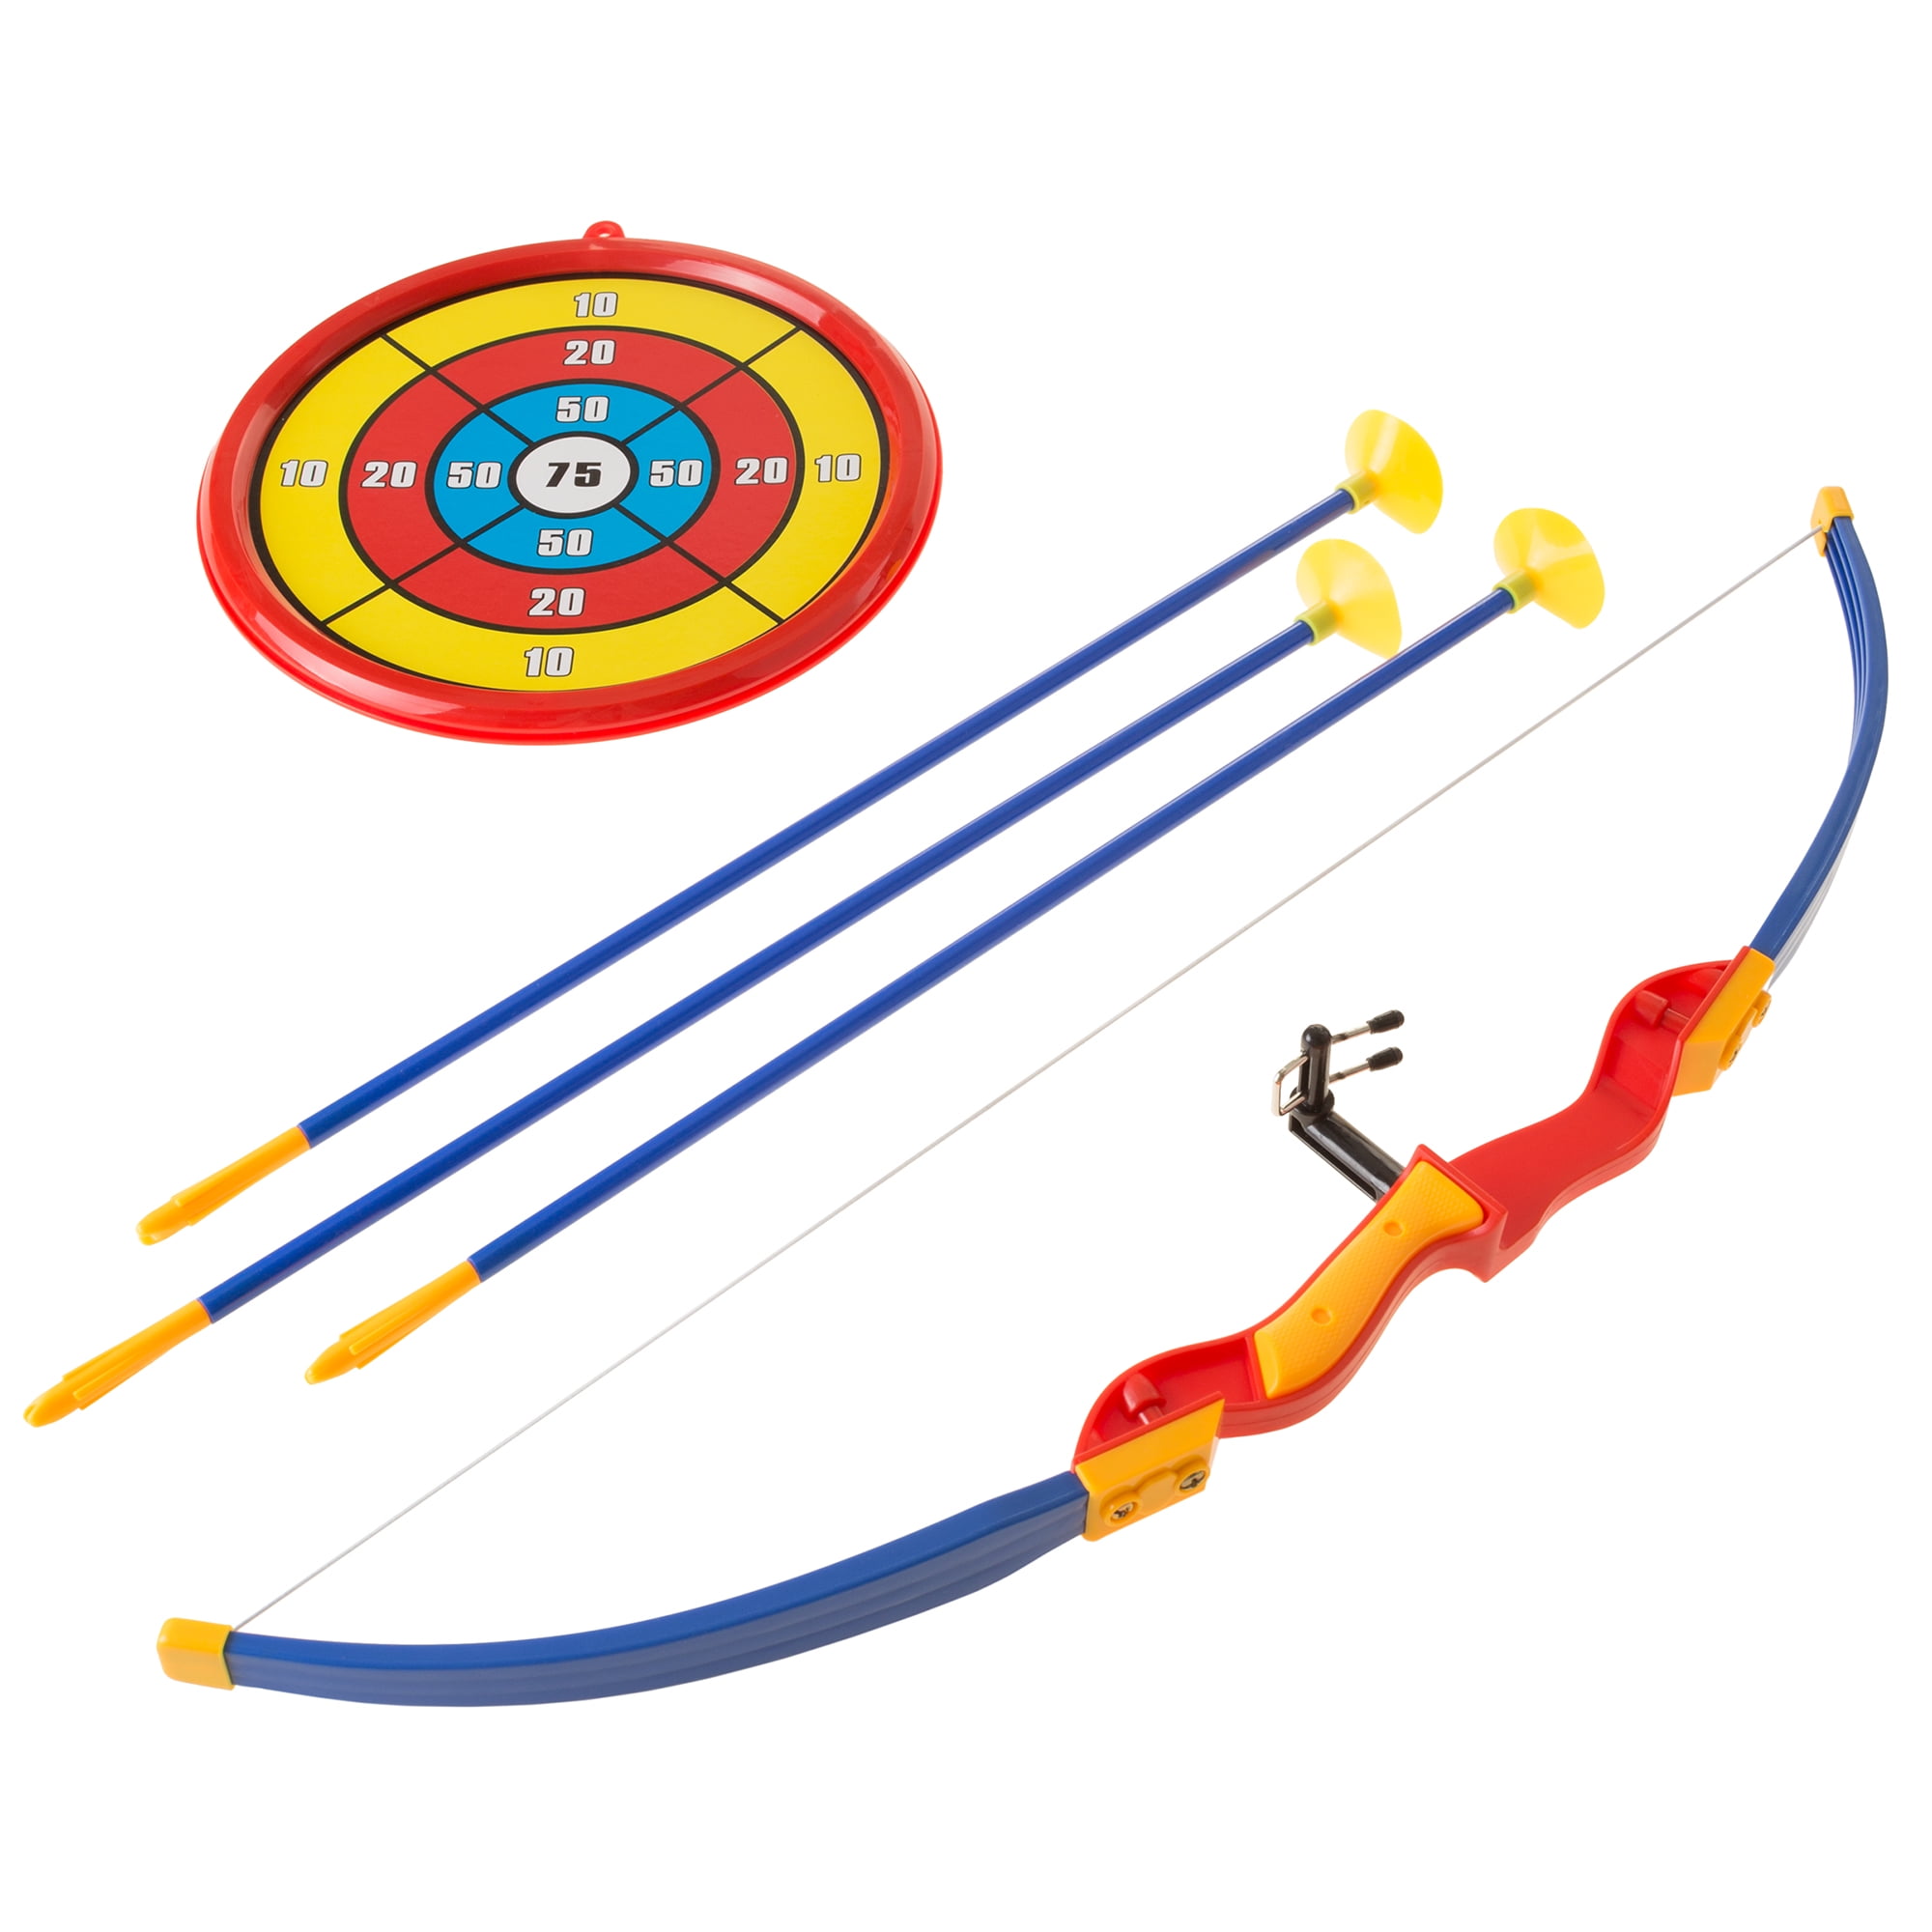 Disney store Brave Merida Archery bow and arrow Costume Accessories Set